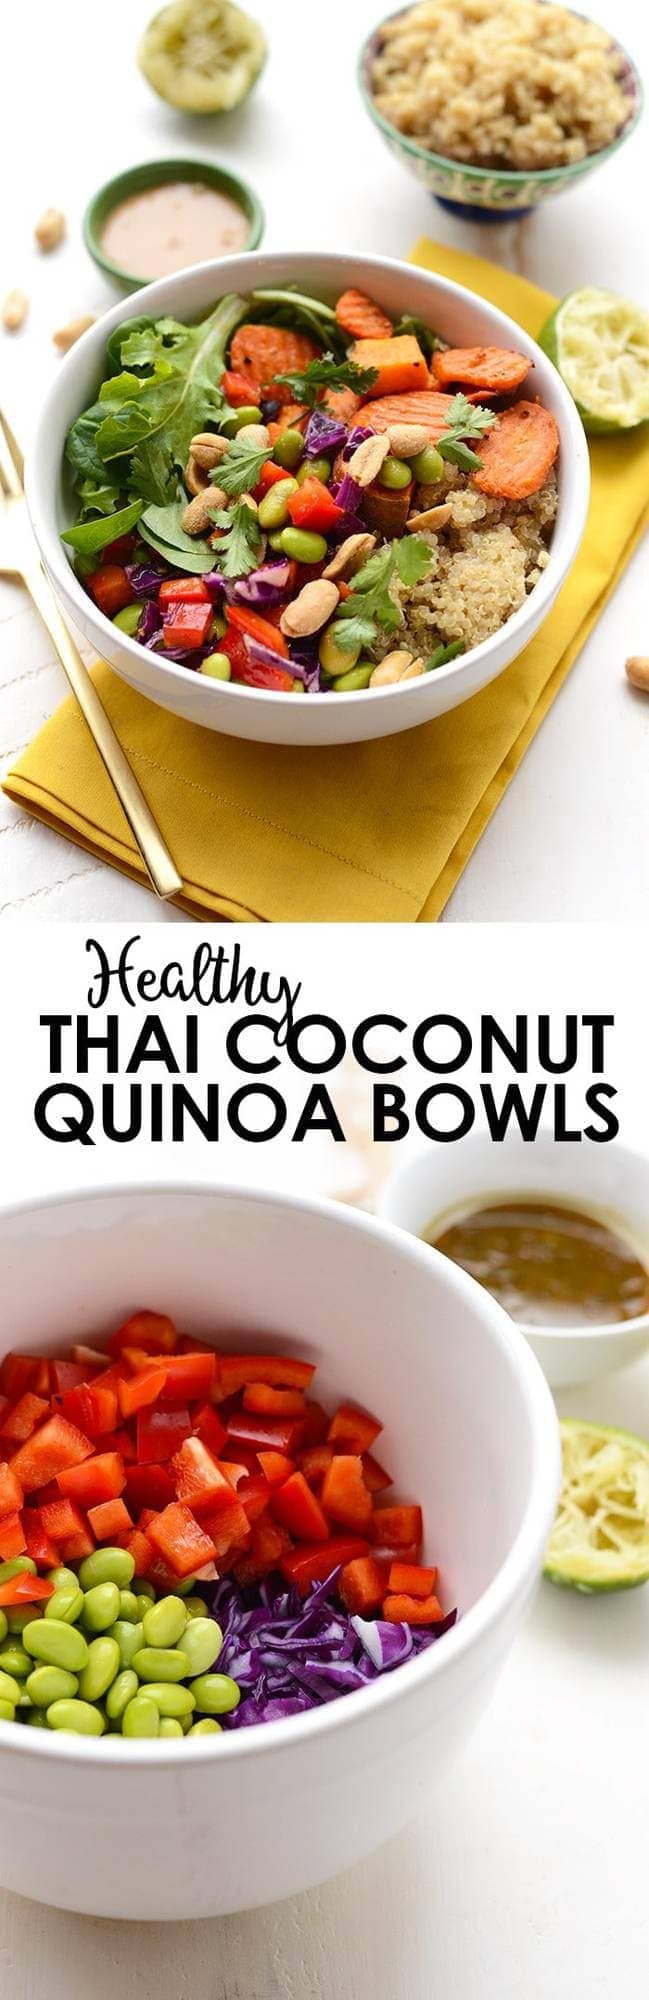 Thai Coconut Quinoa Bowls Gf And Vegan Fit Foodie Finds 2417